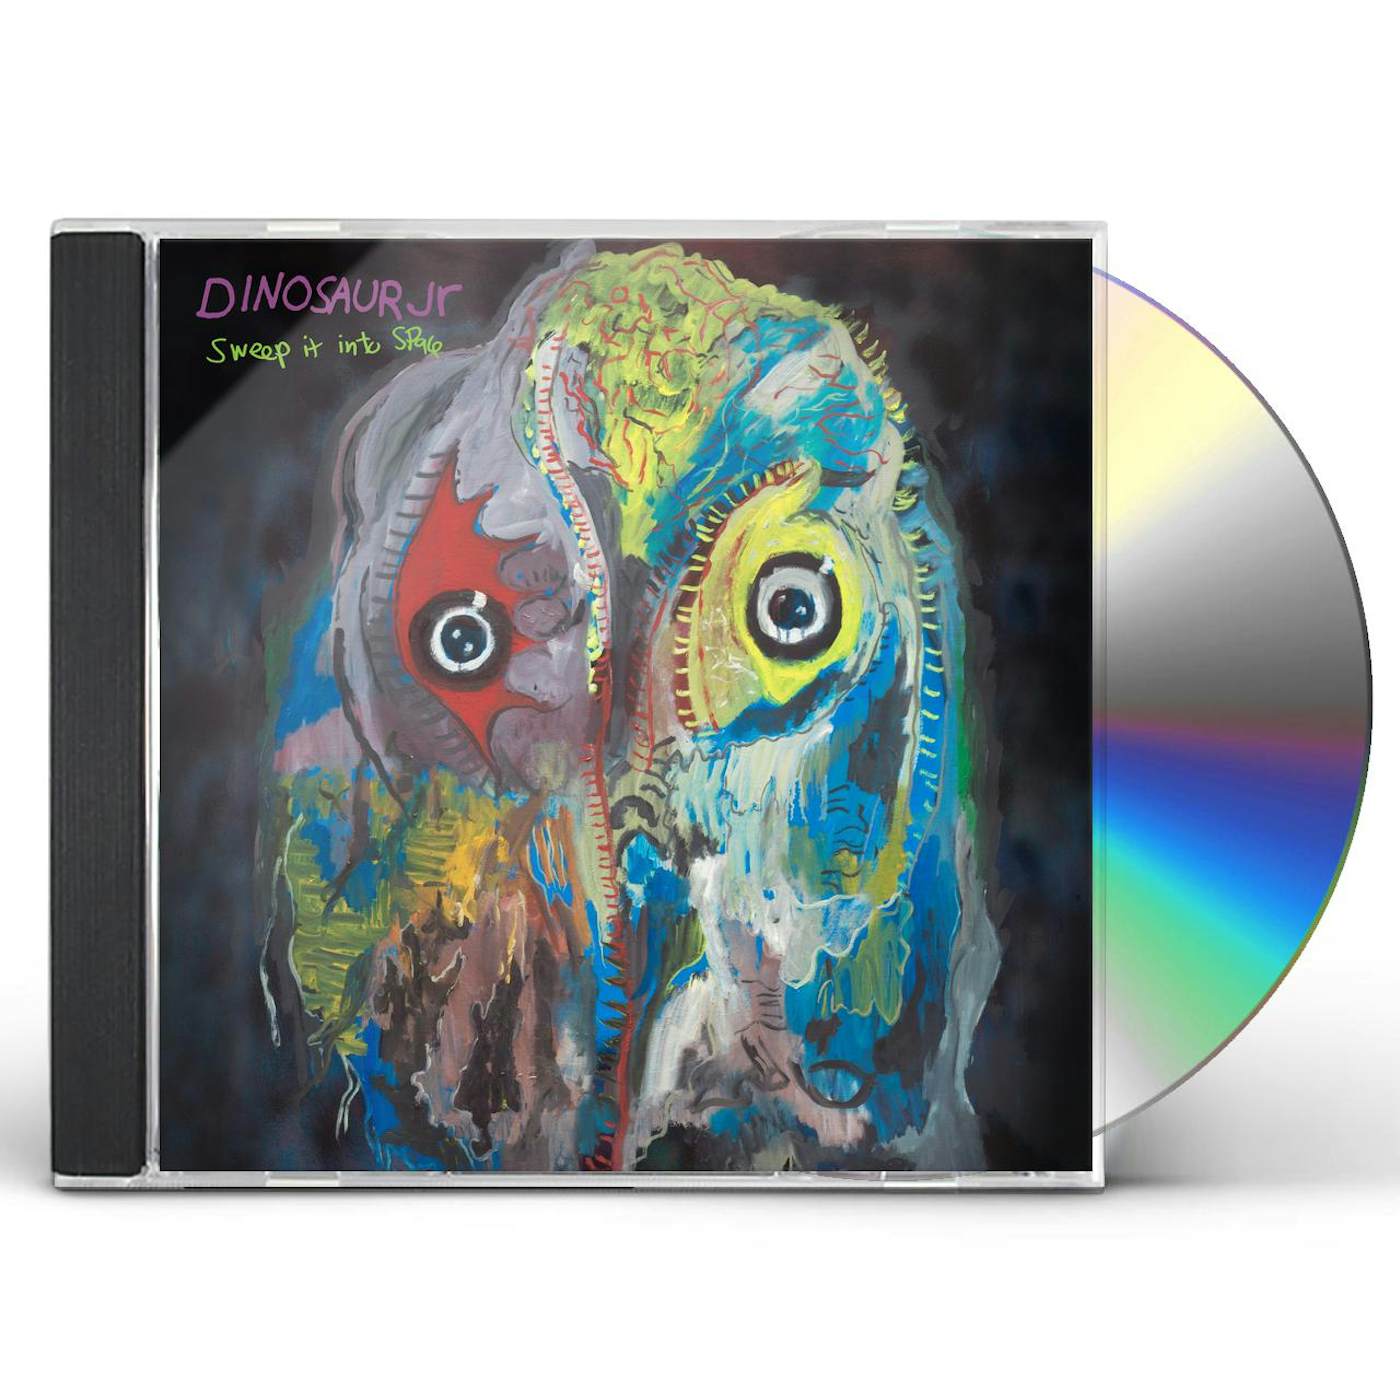 Dinosaur Jr. SWEEP IT INTO SPACE CD